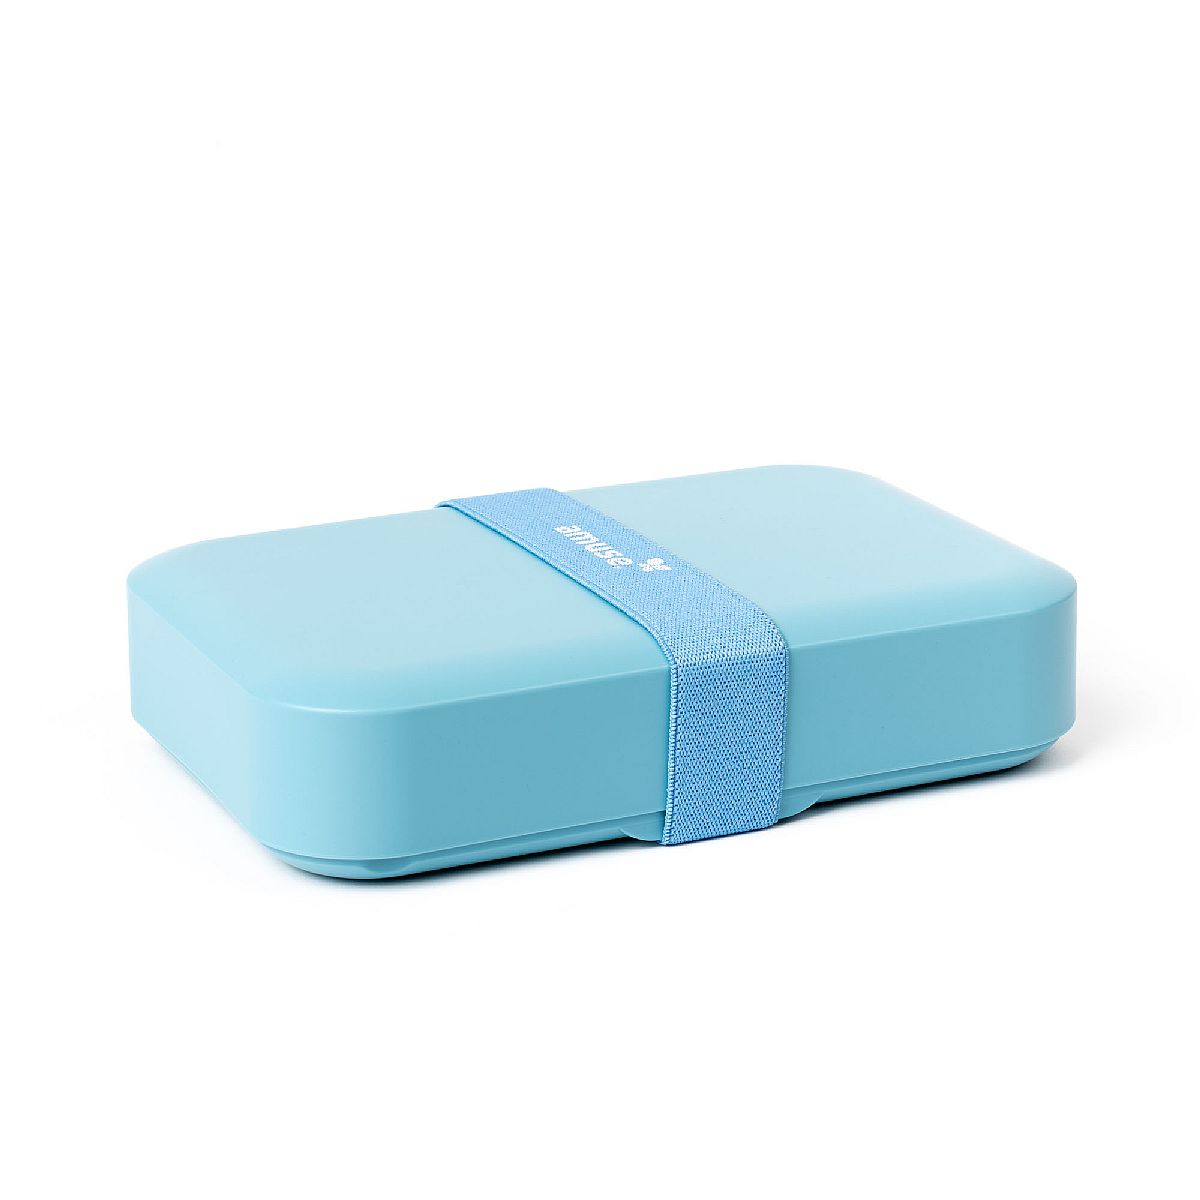 Amuse lunchbox duży z gumką błękitny